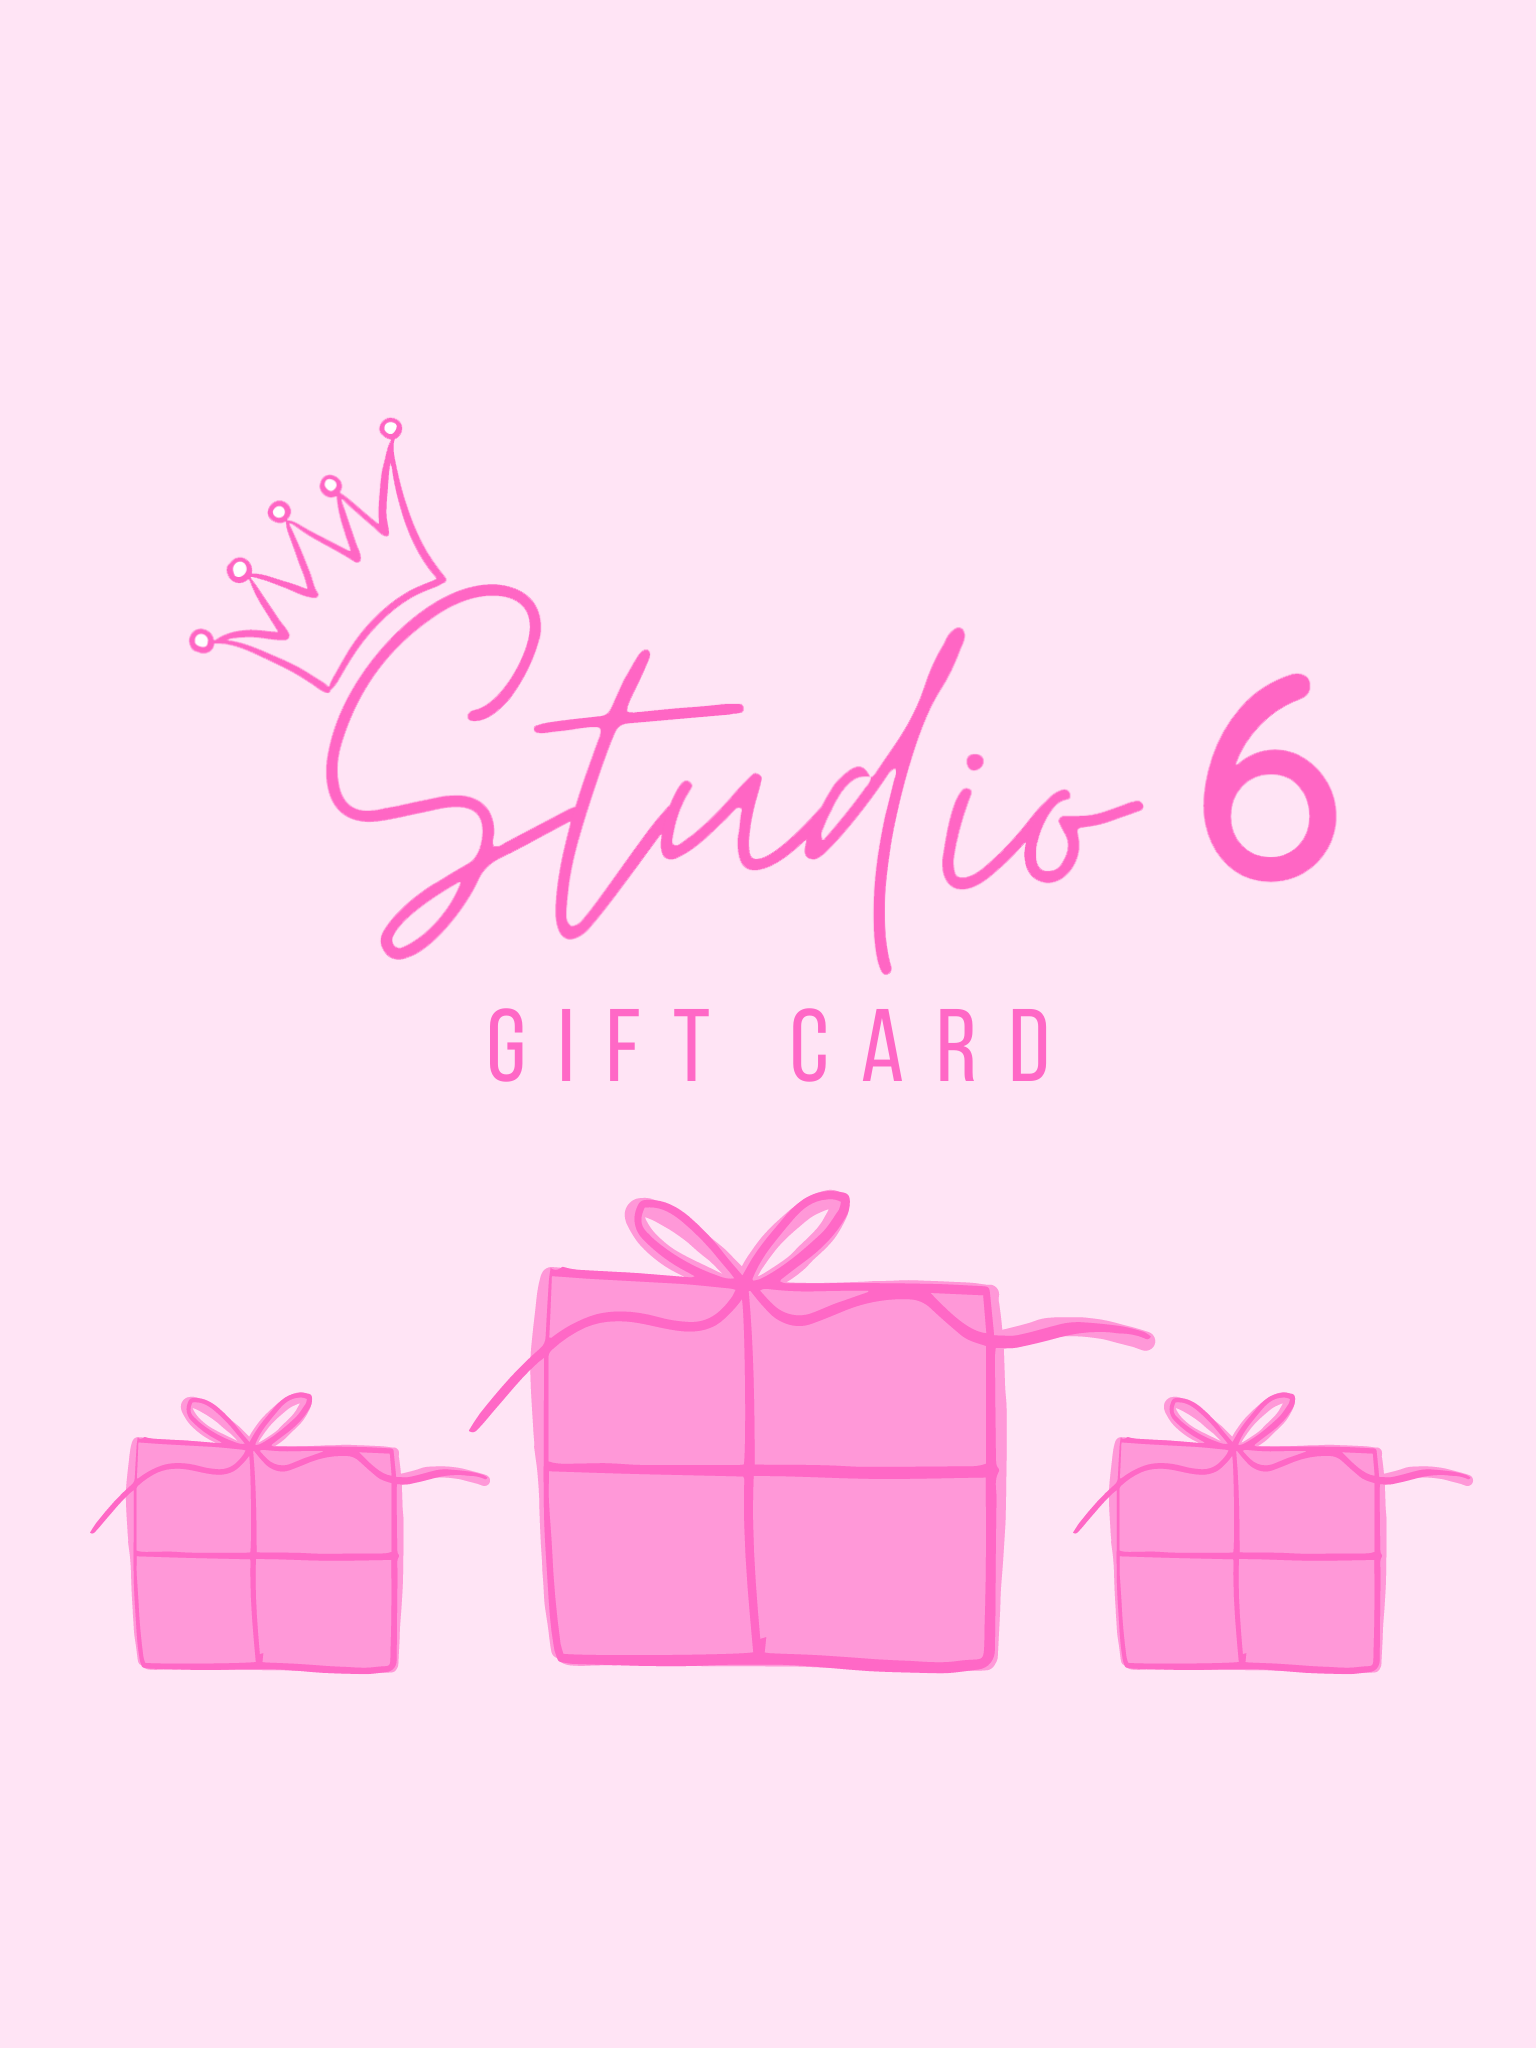 Studio 6 Gift Card